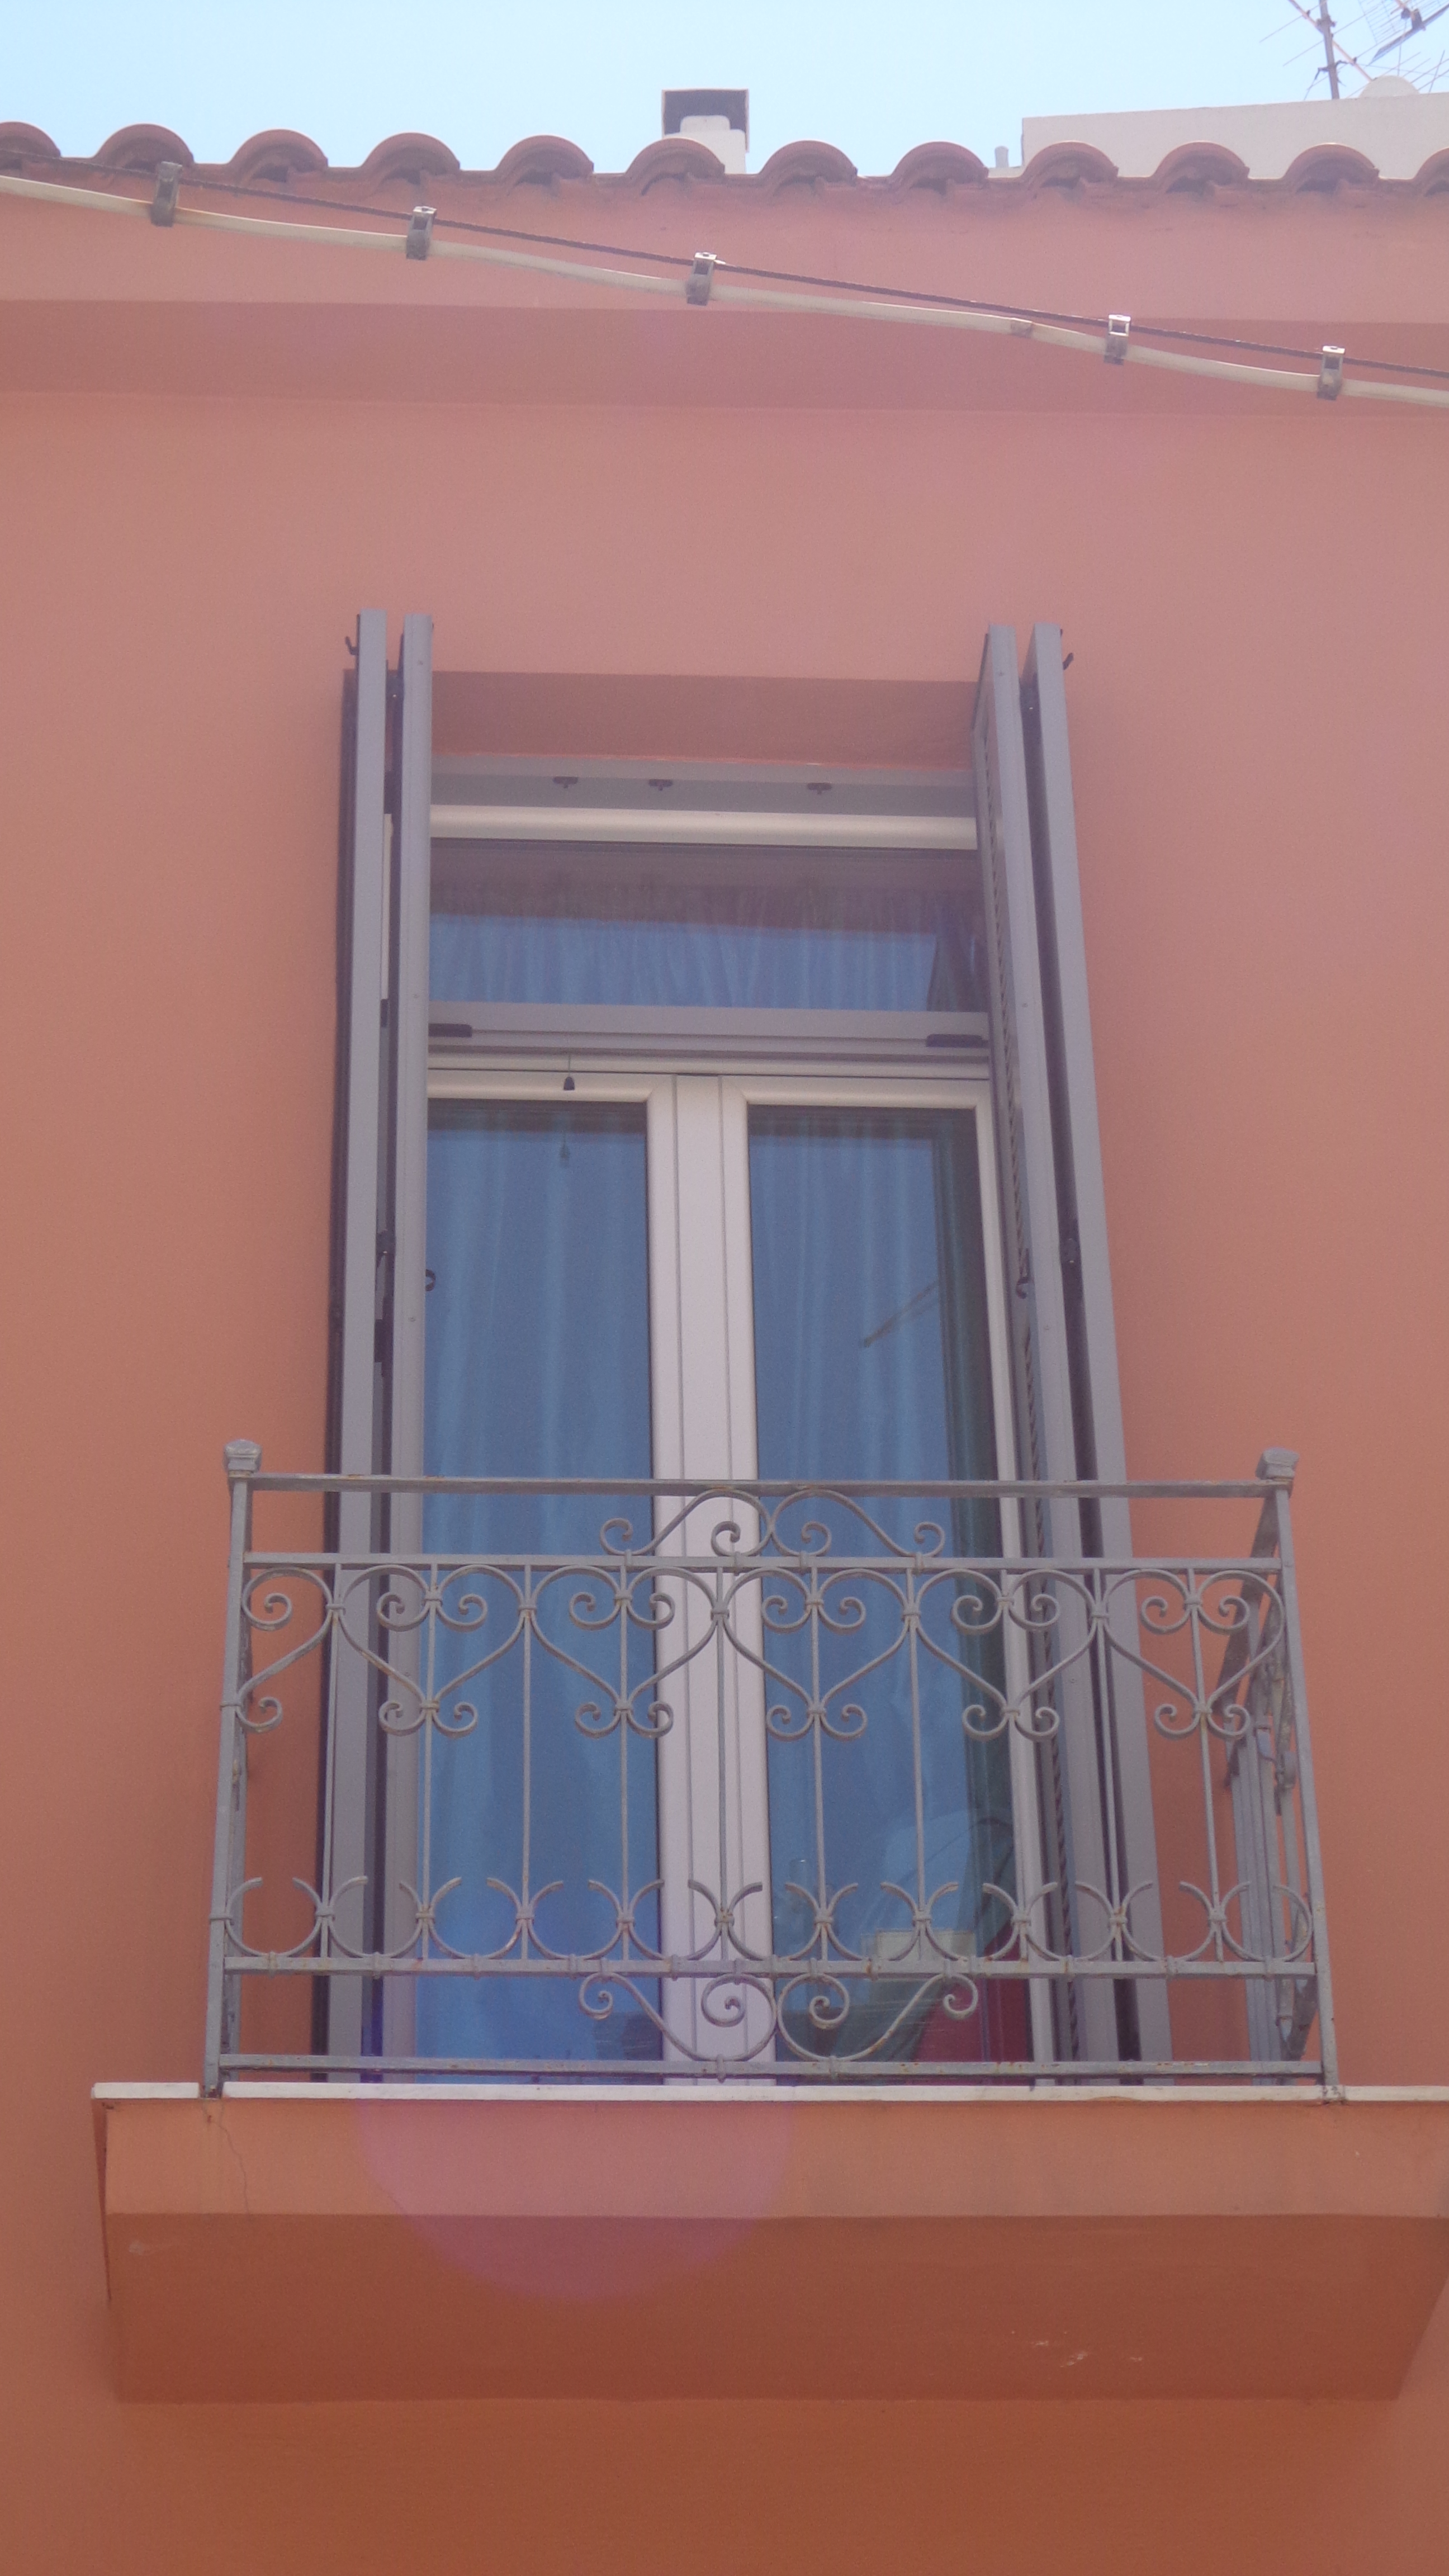 Symmetric balcony with railings.